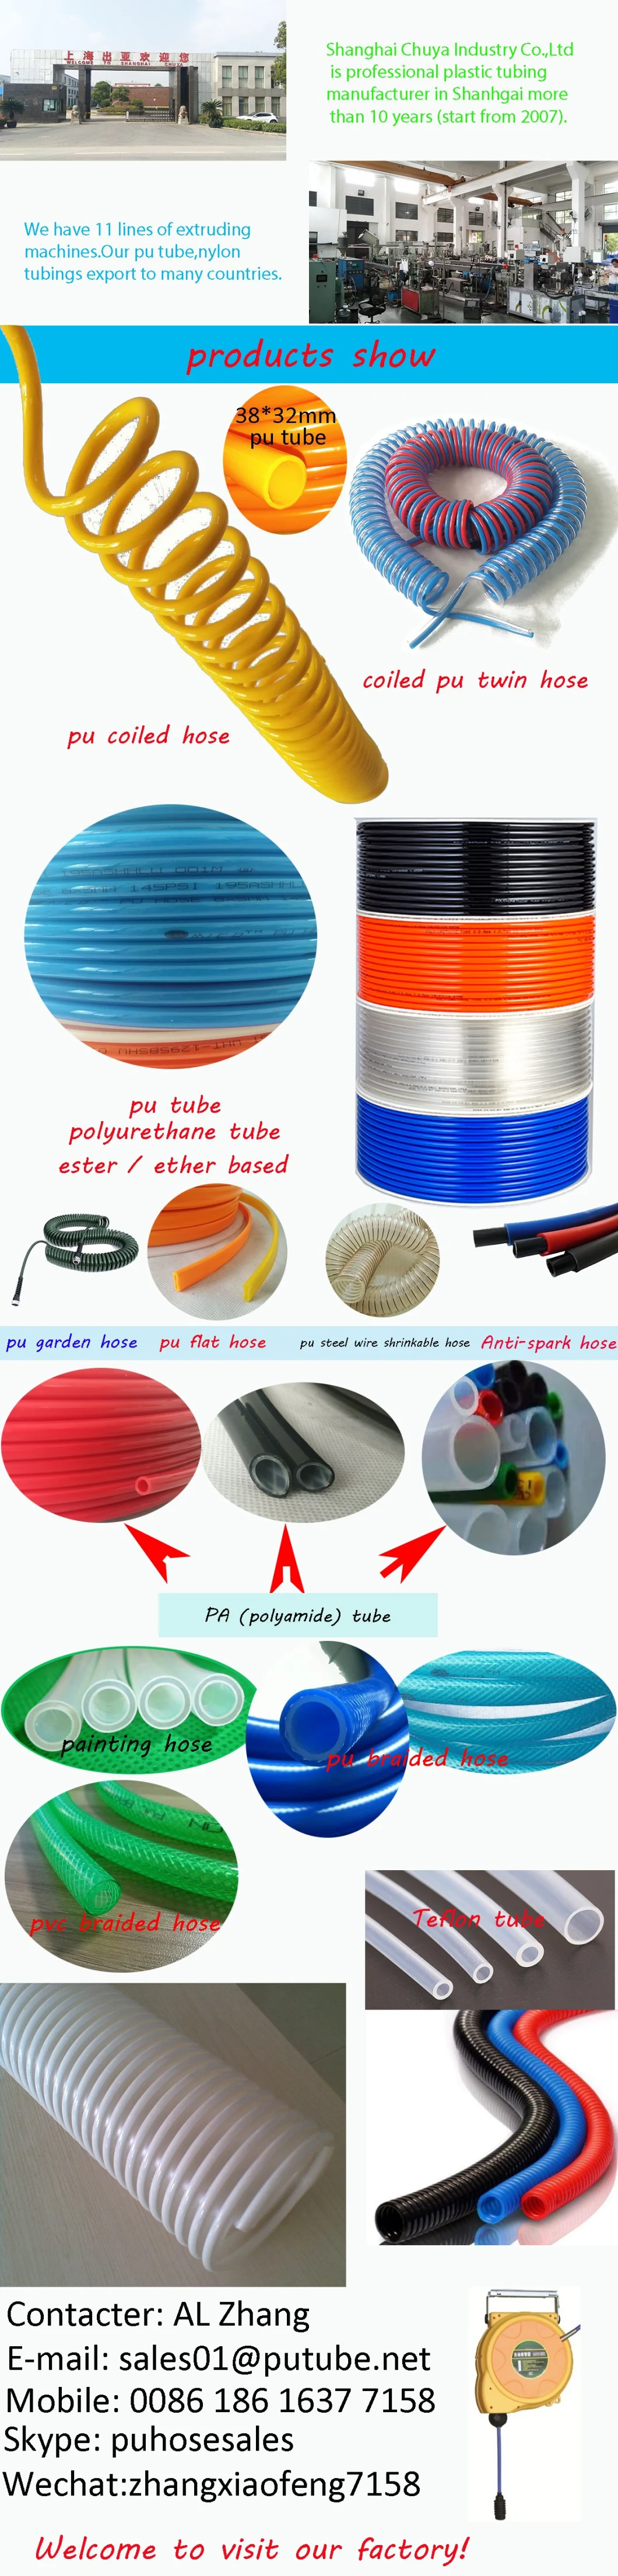 Transparent Blue PU Air Tube, Polyurethane Ester Based Pneumatic Hose Tube